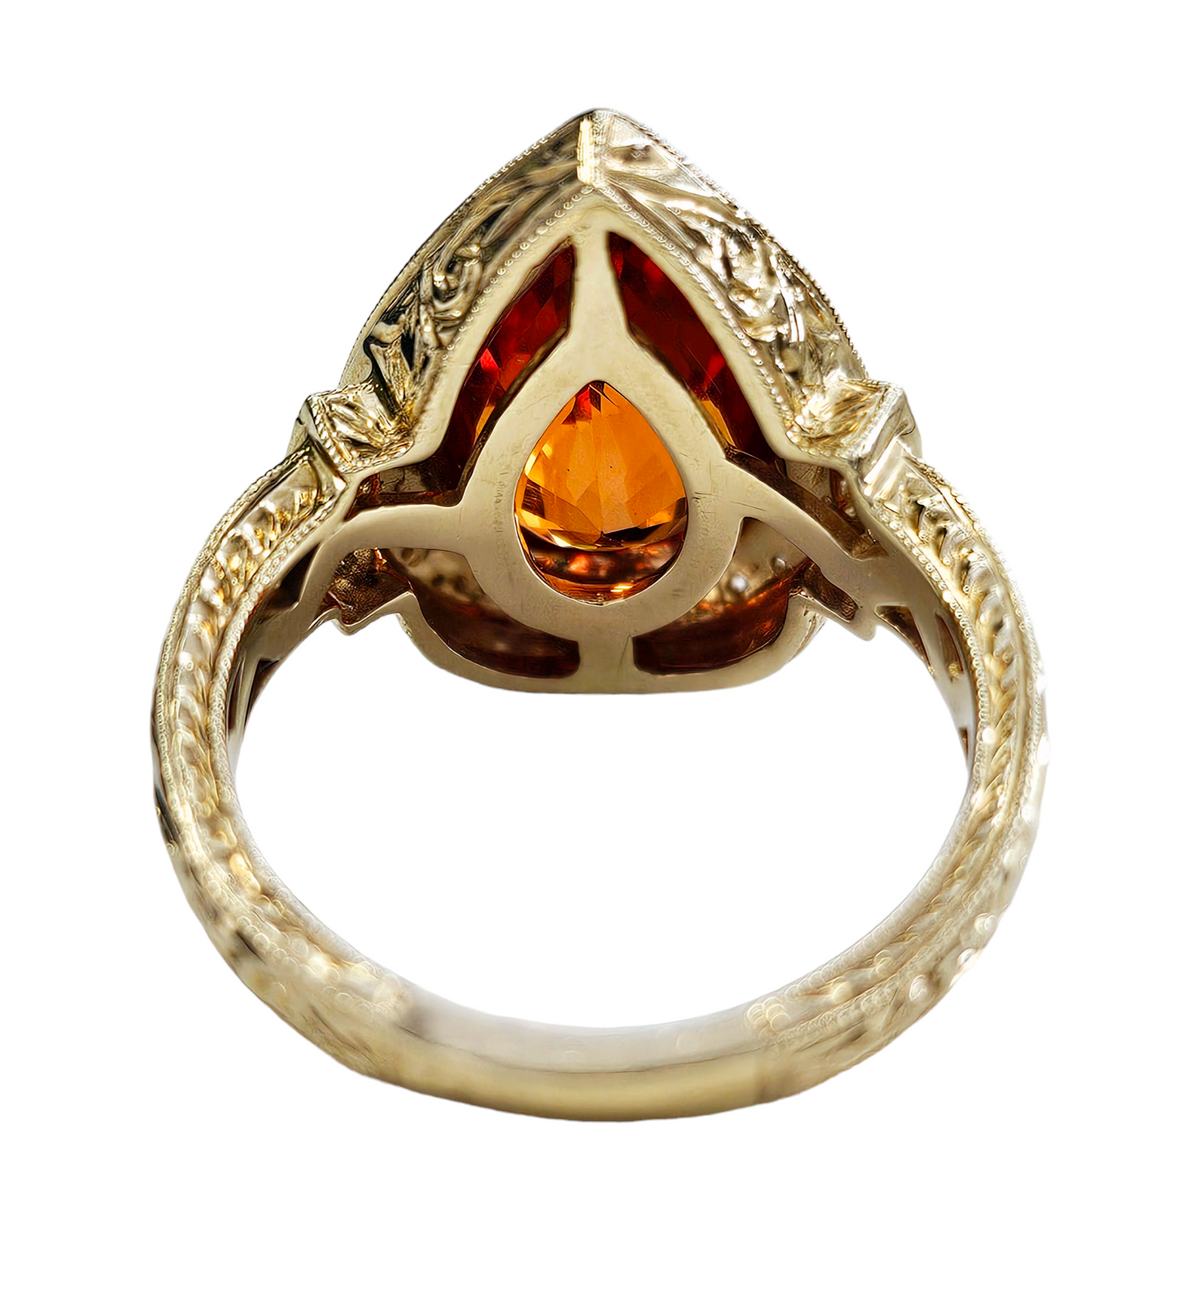 Pear Shape Bezel set Mandarin Garnet with Diamond Halo and Intricate Carved Design made in 14-Karat Yellow Gold